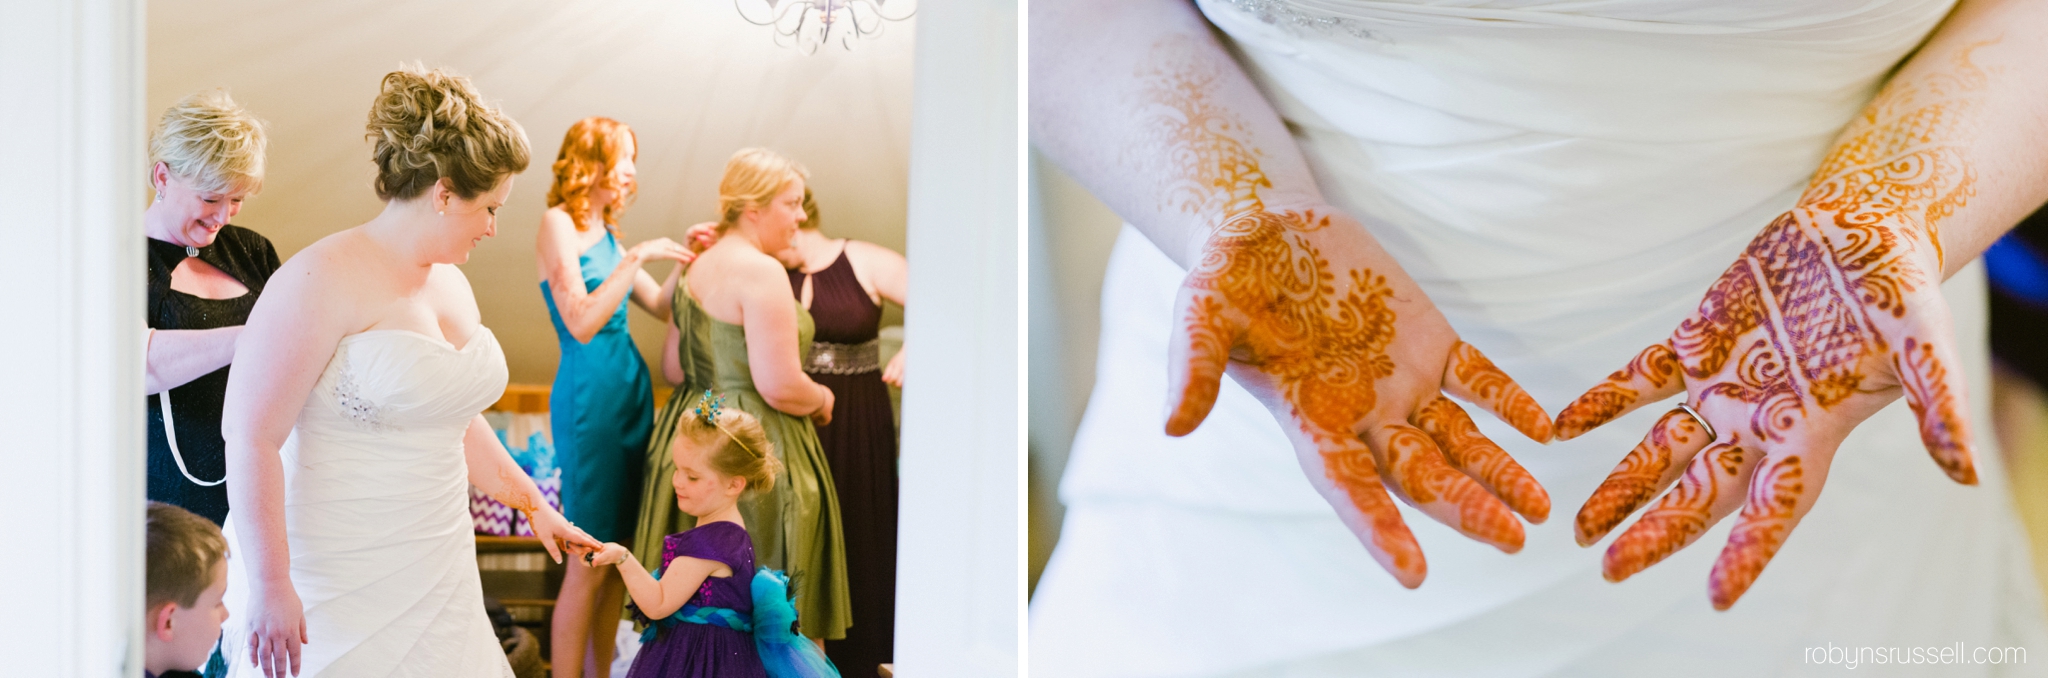 6-bride-with-henna-getting-ready-cambridge-.jpg